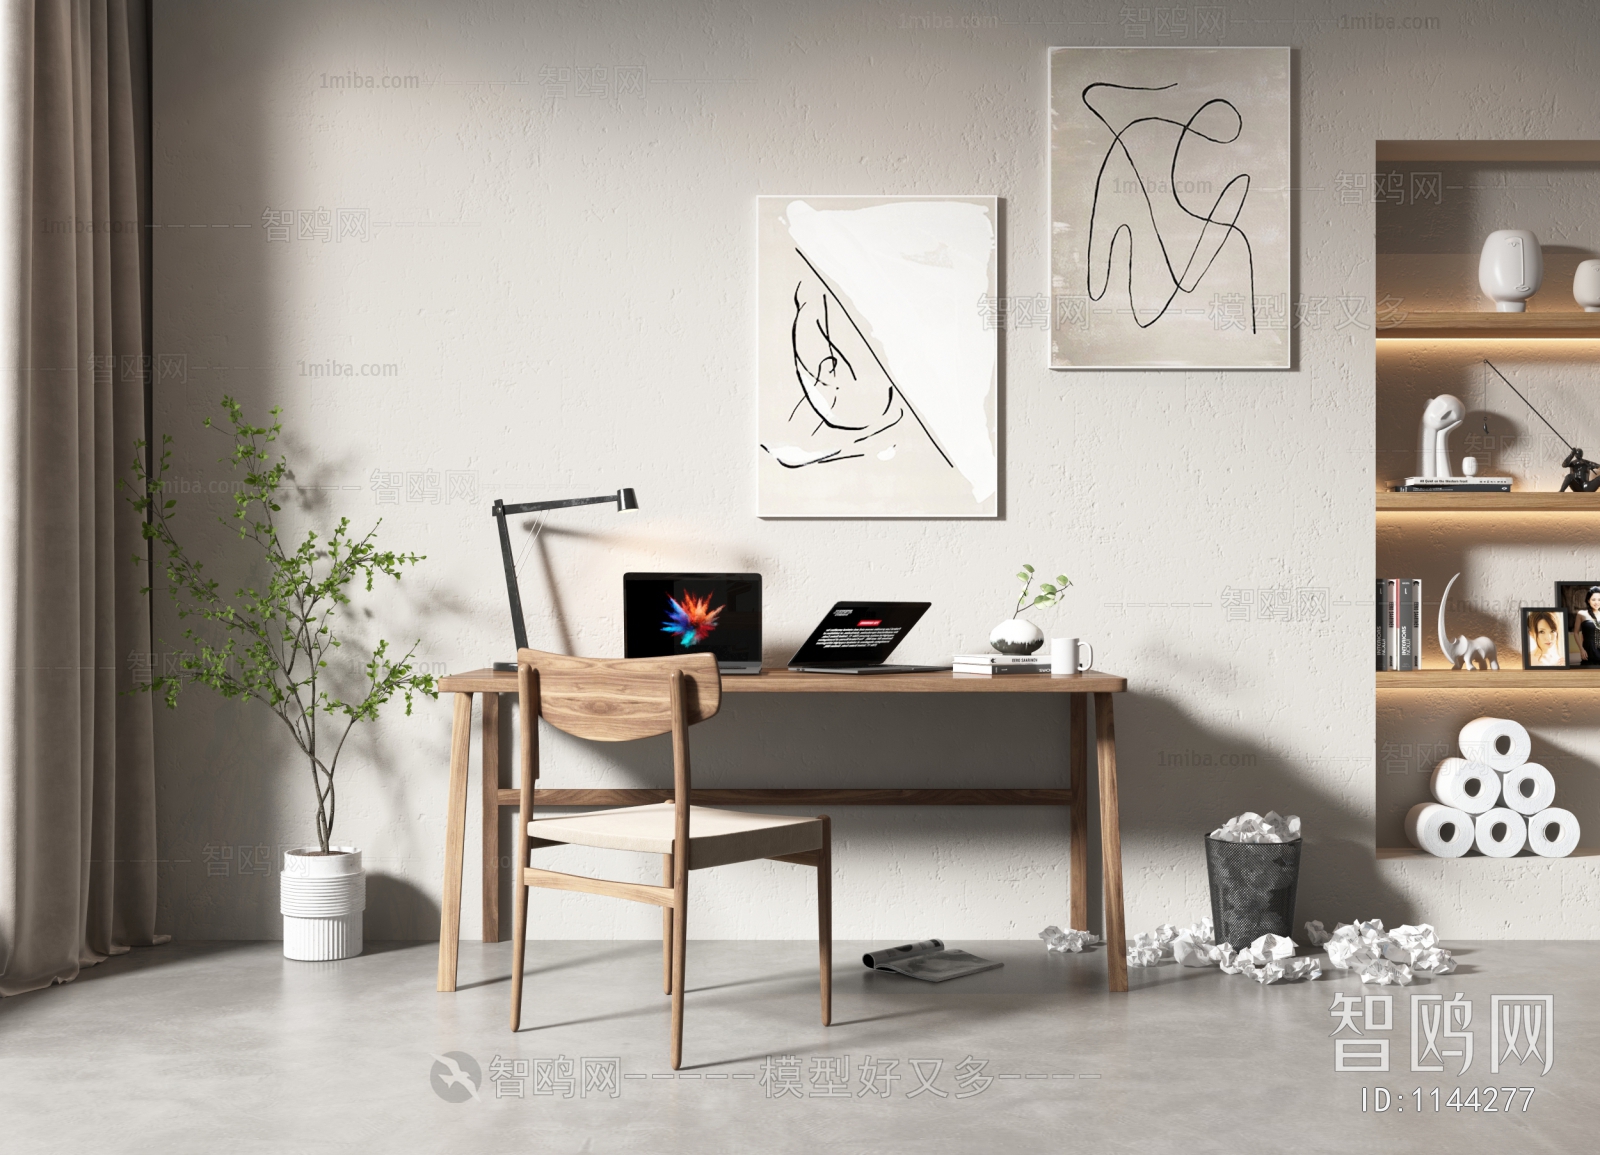 Wabi-sabi Style Computer Desk And Chair